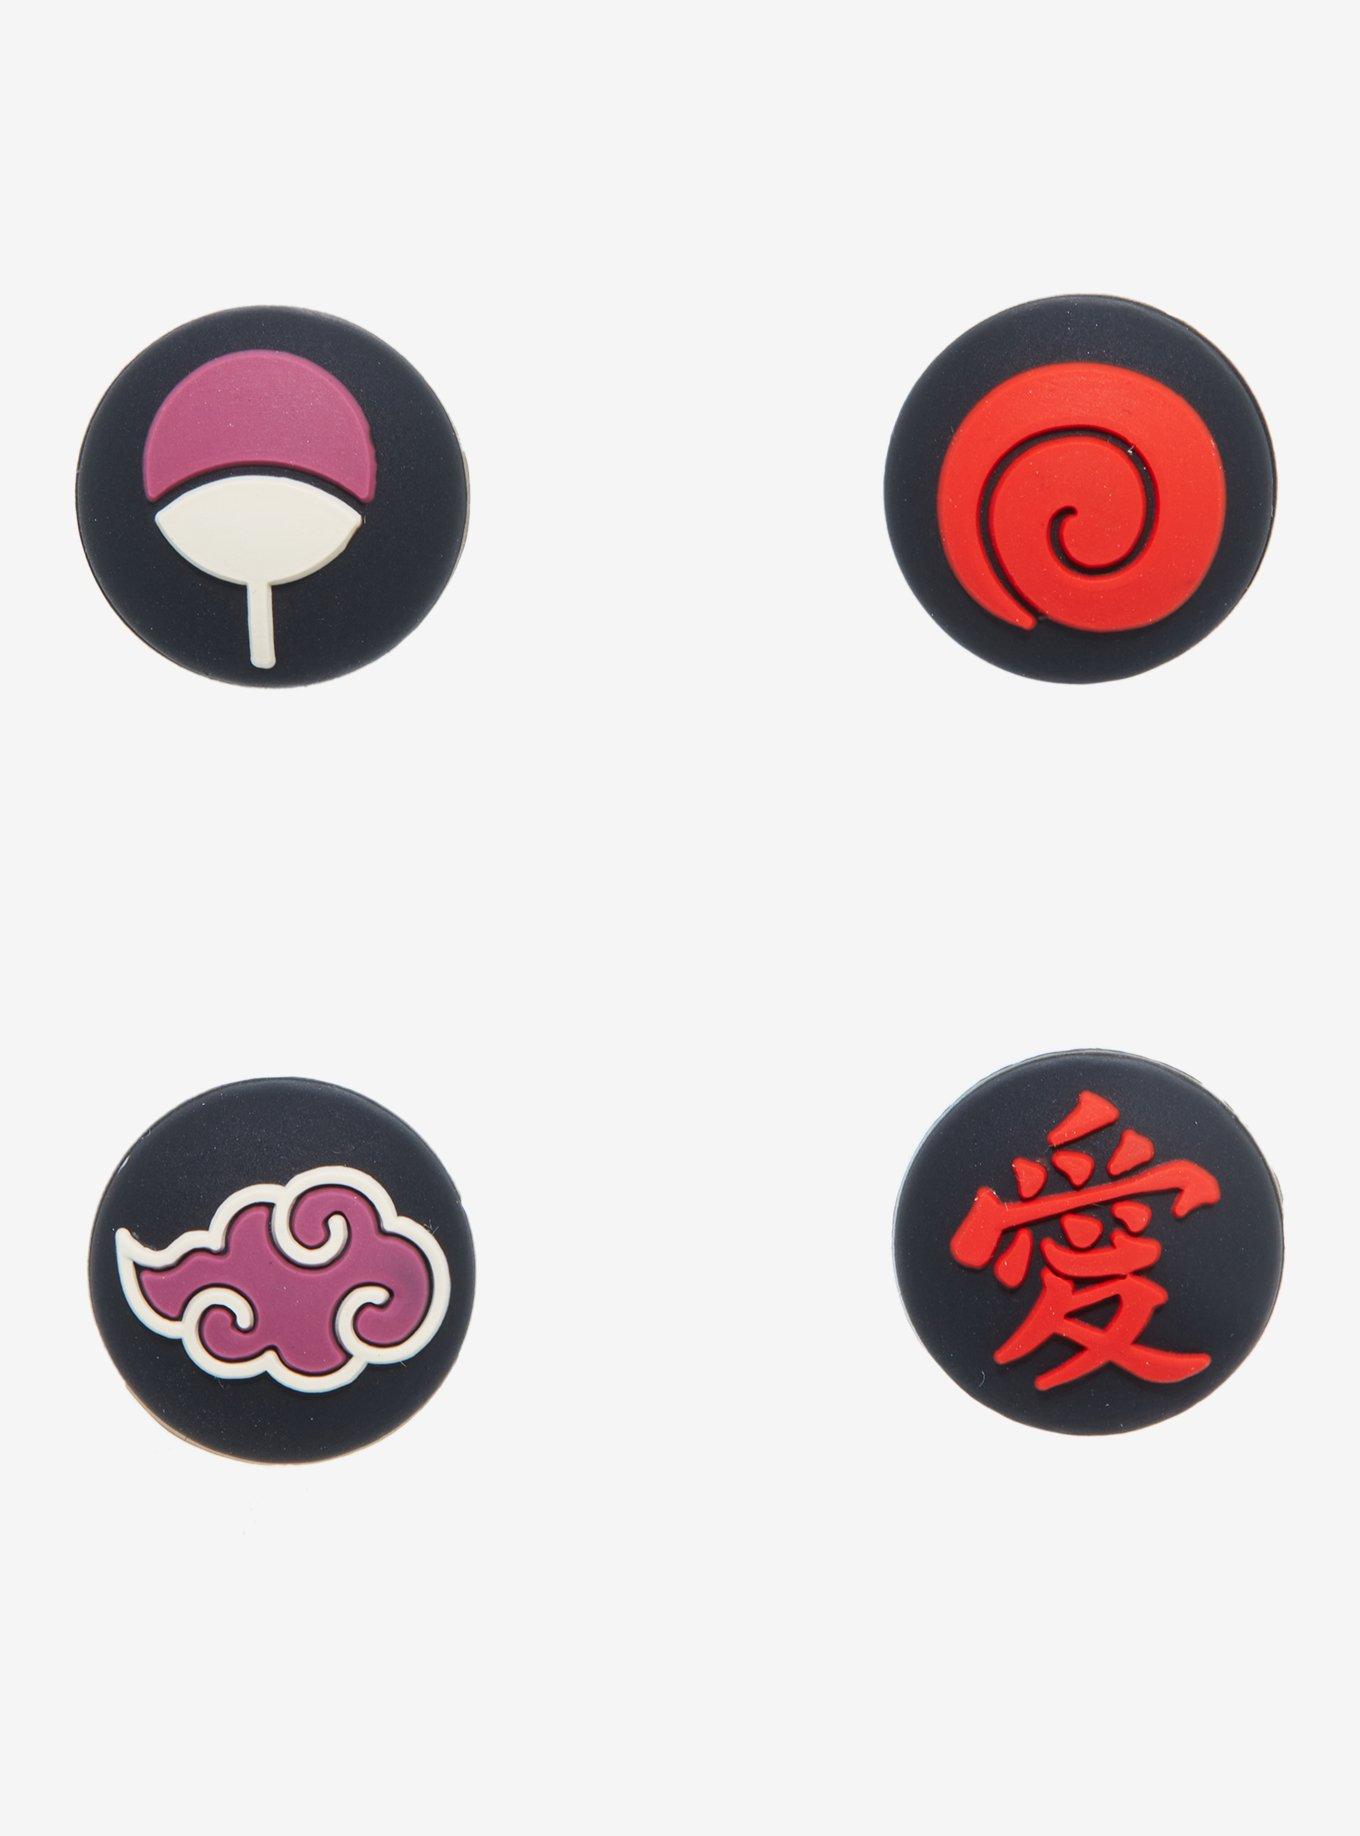 App Store icon / naruto  App store icon, App anime, Animated icons